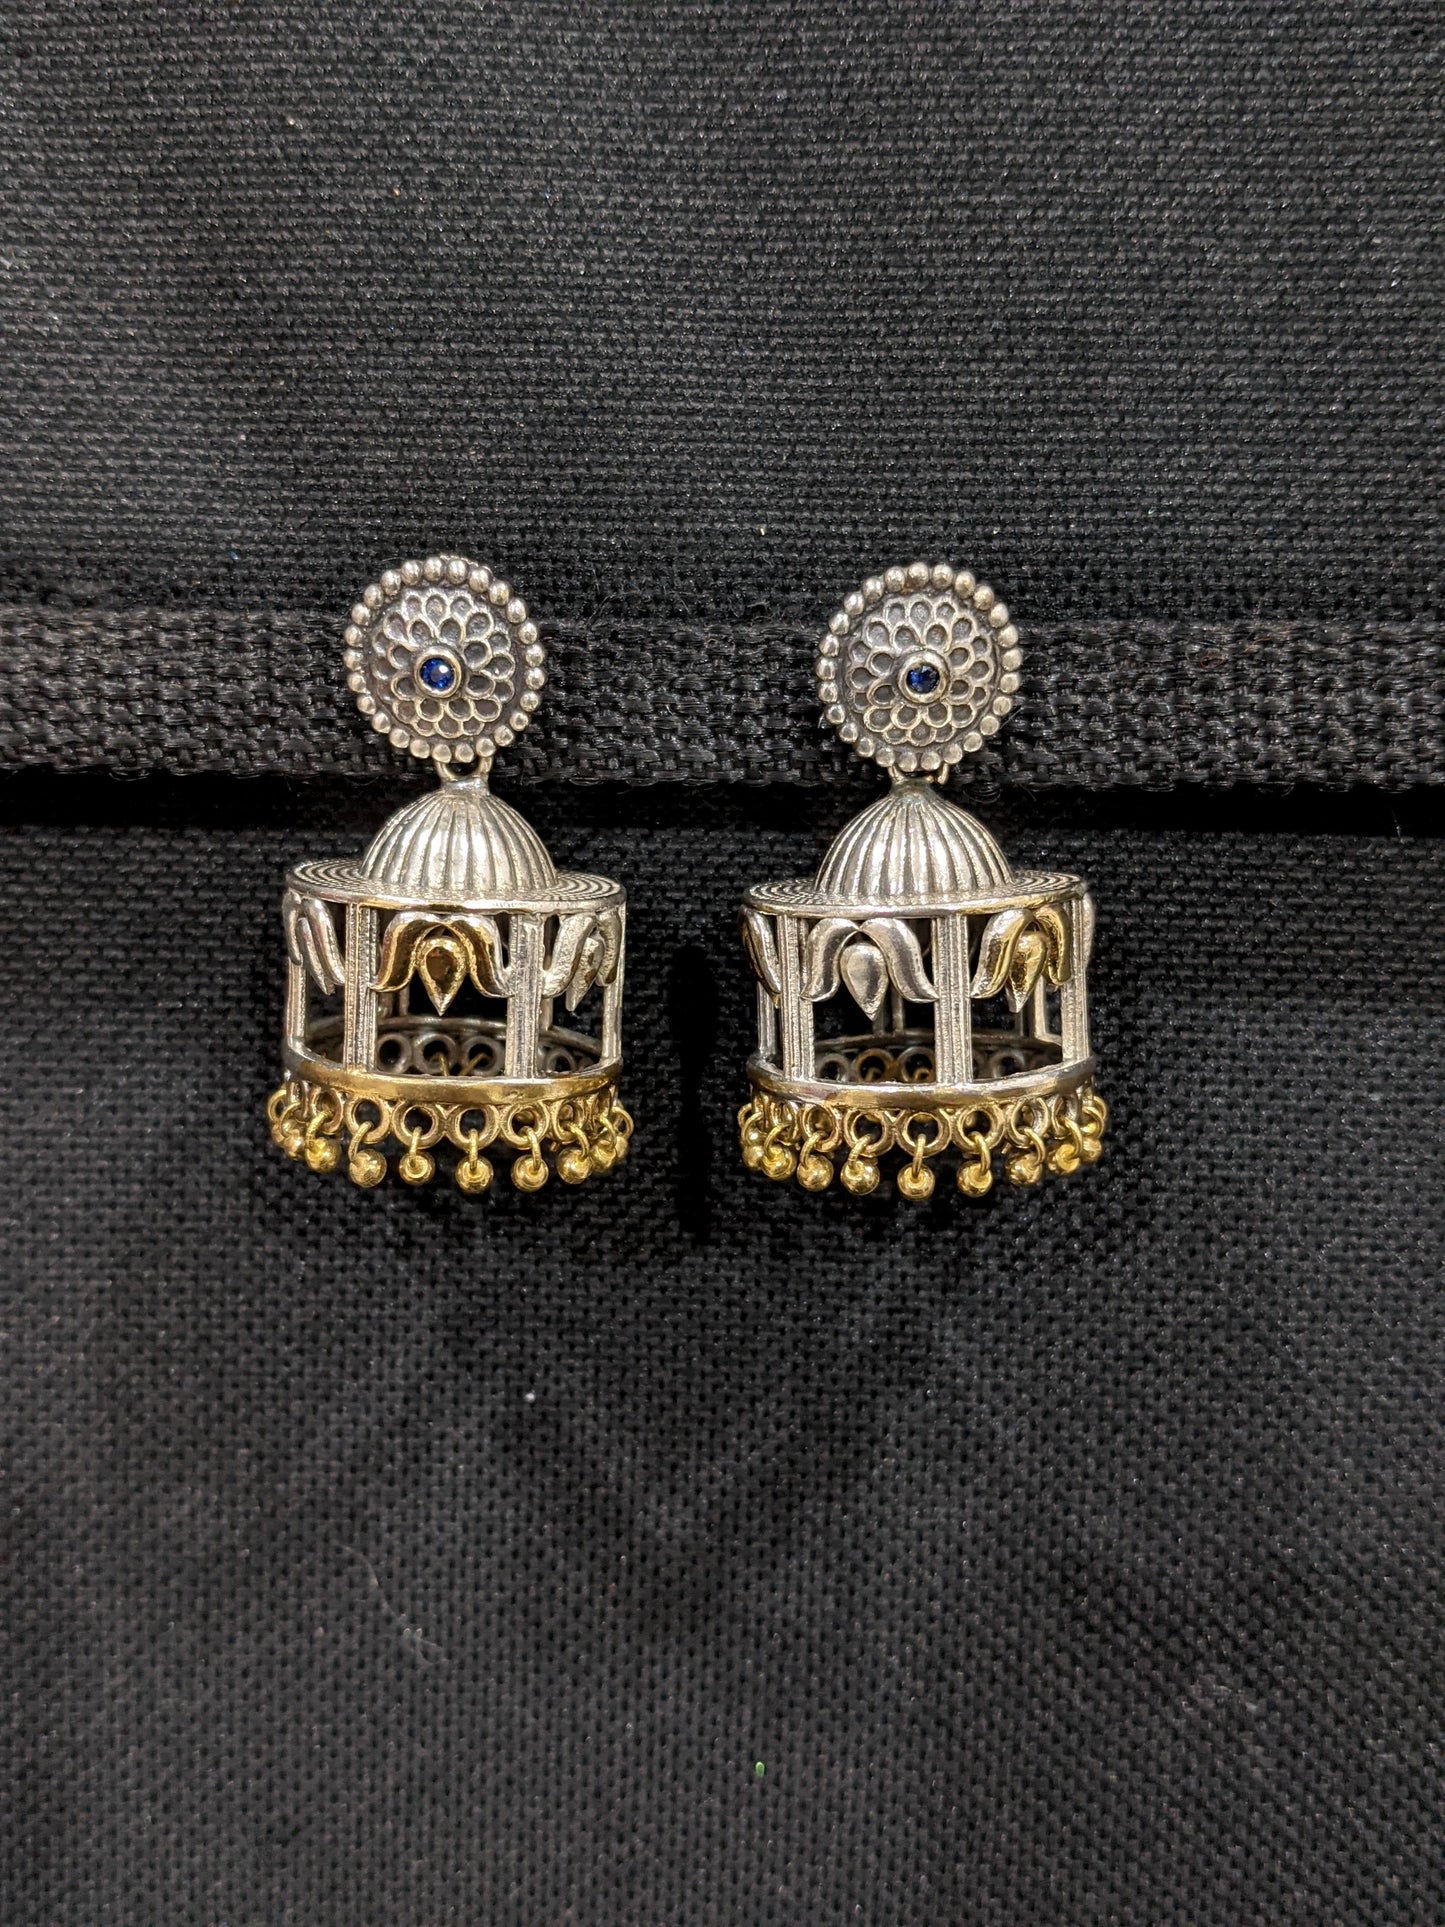 Oxidized silver Dual Tone Dome Jhumka Earrings